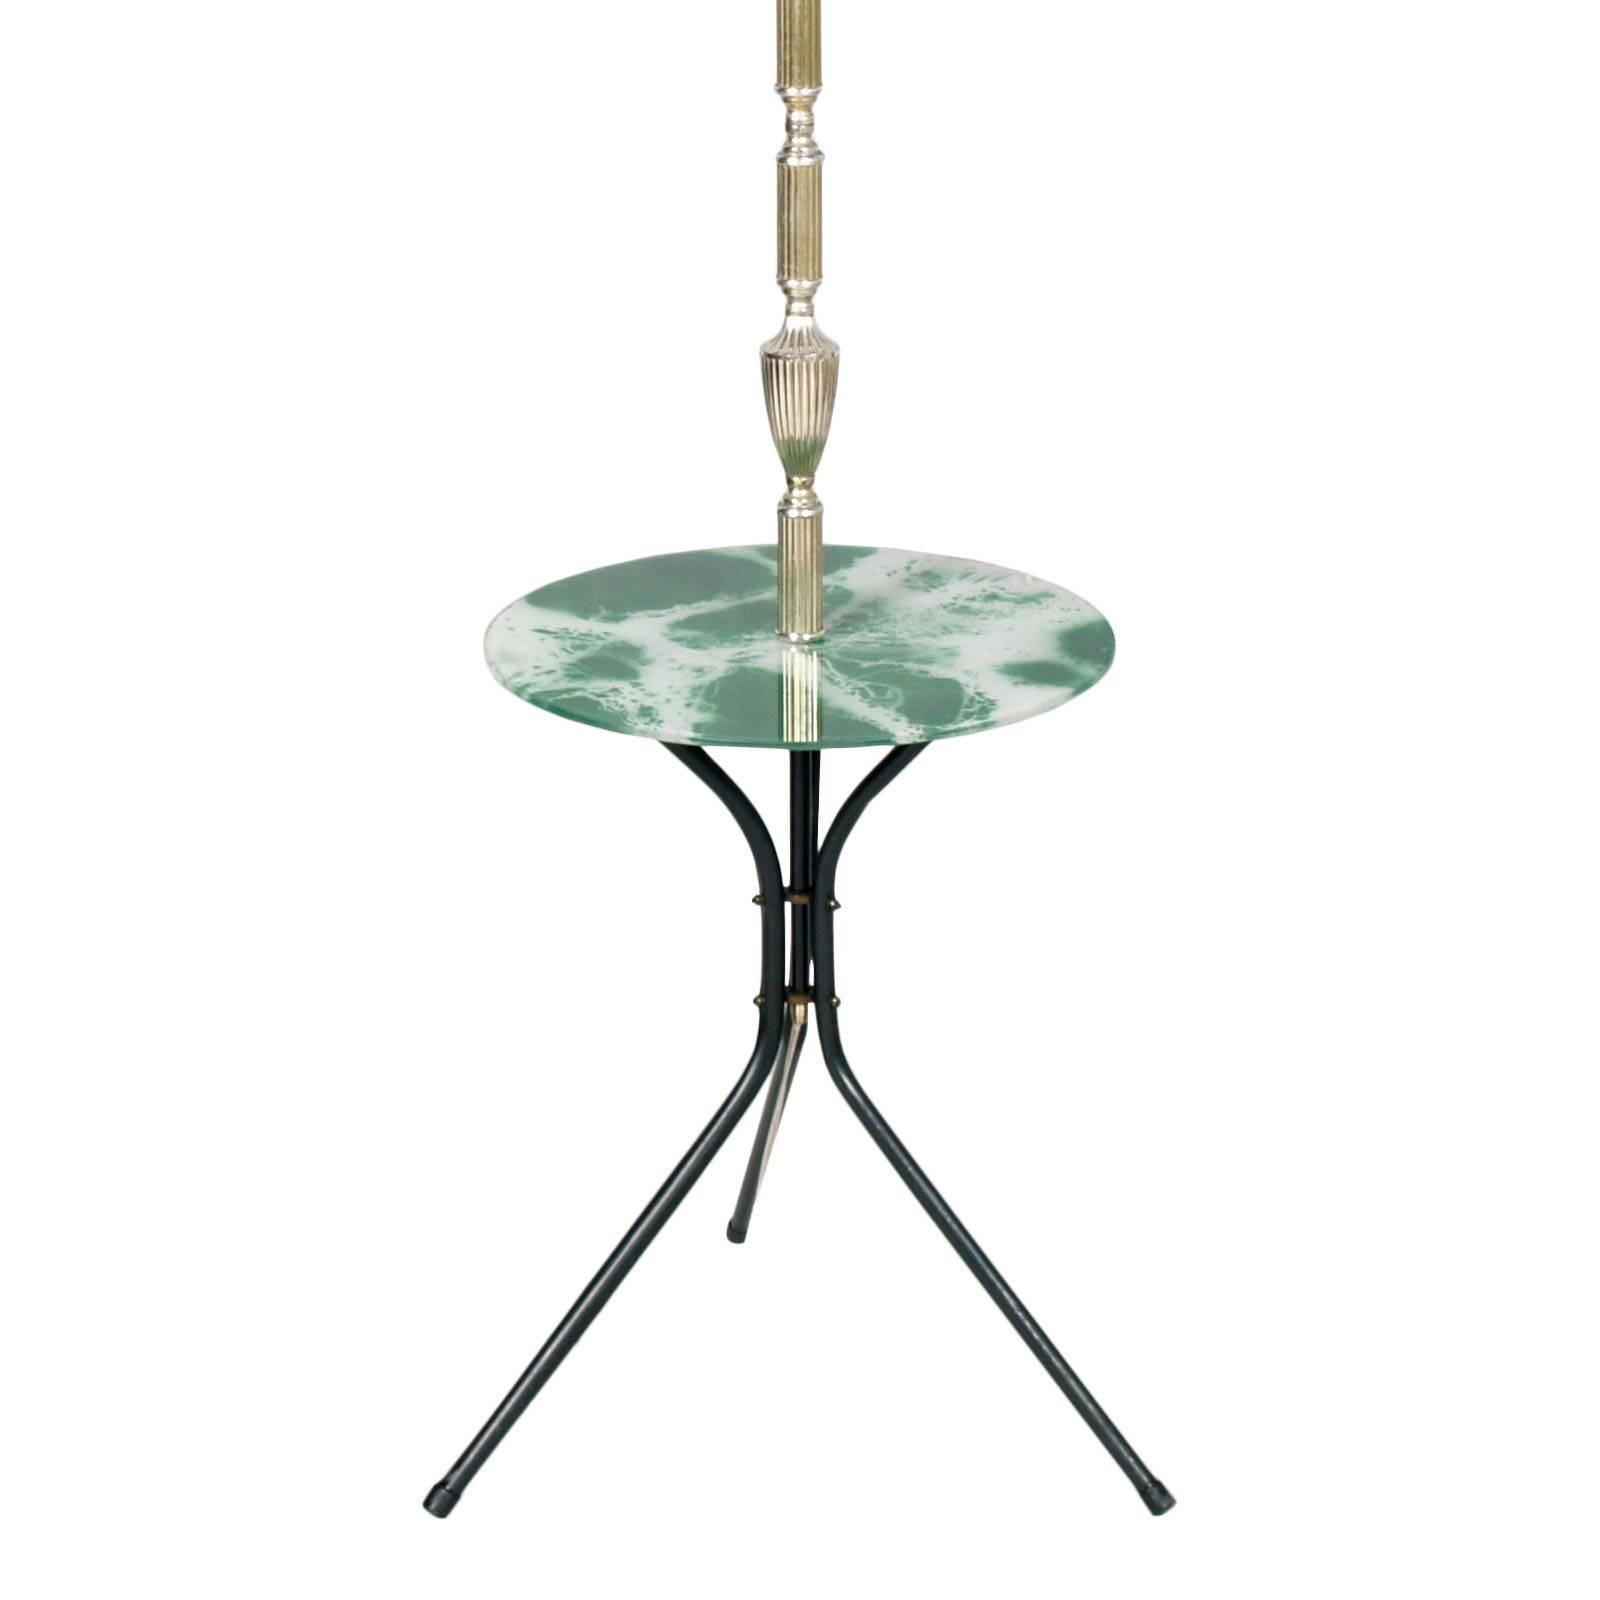 Italian Art Deco Mid-Century Modern Tripod Floor Lamp with Coffee Table Gio Ponti Style For Sale